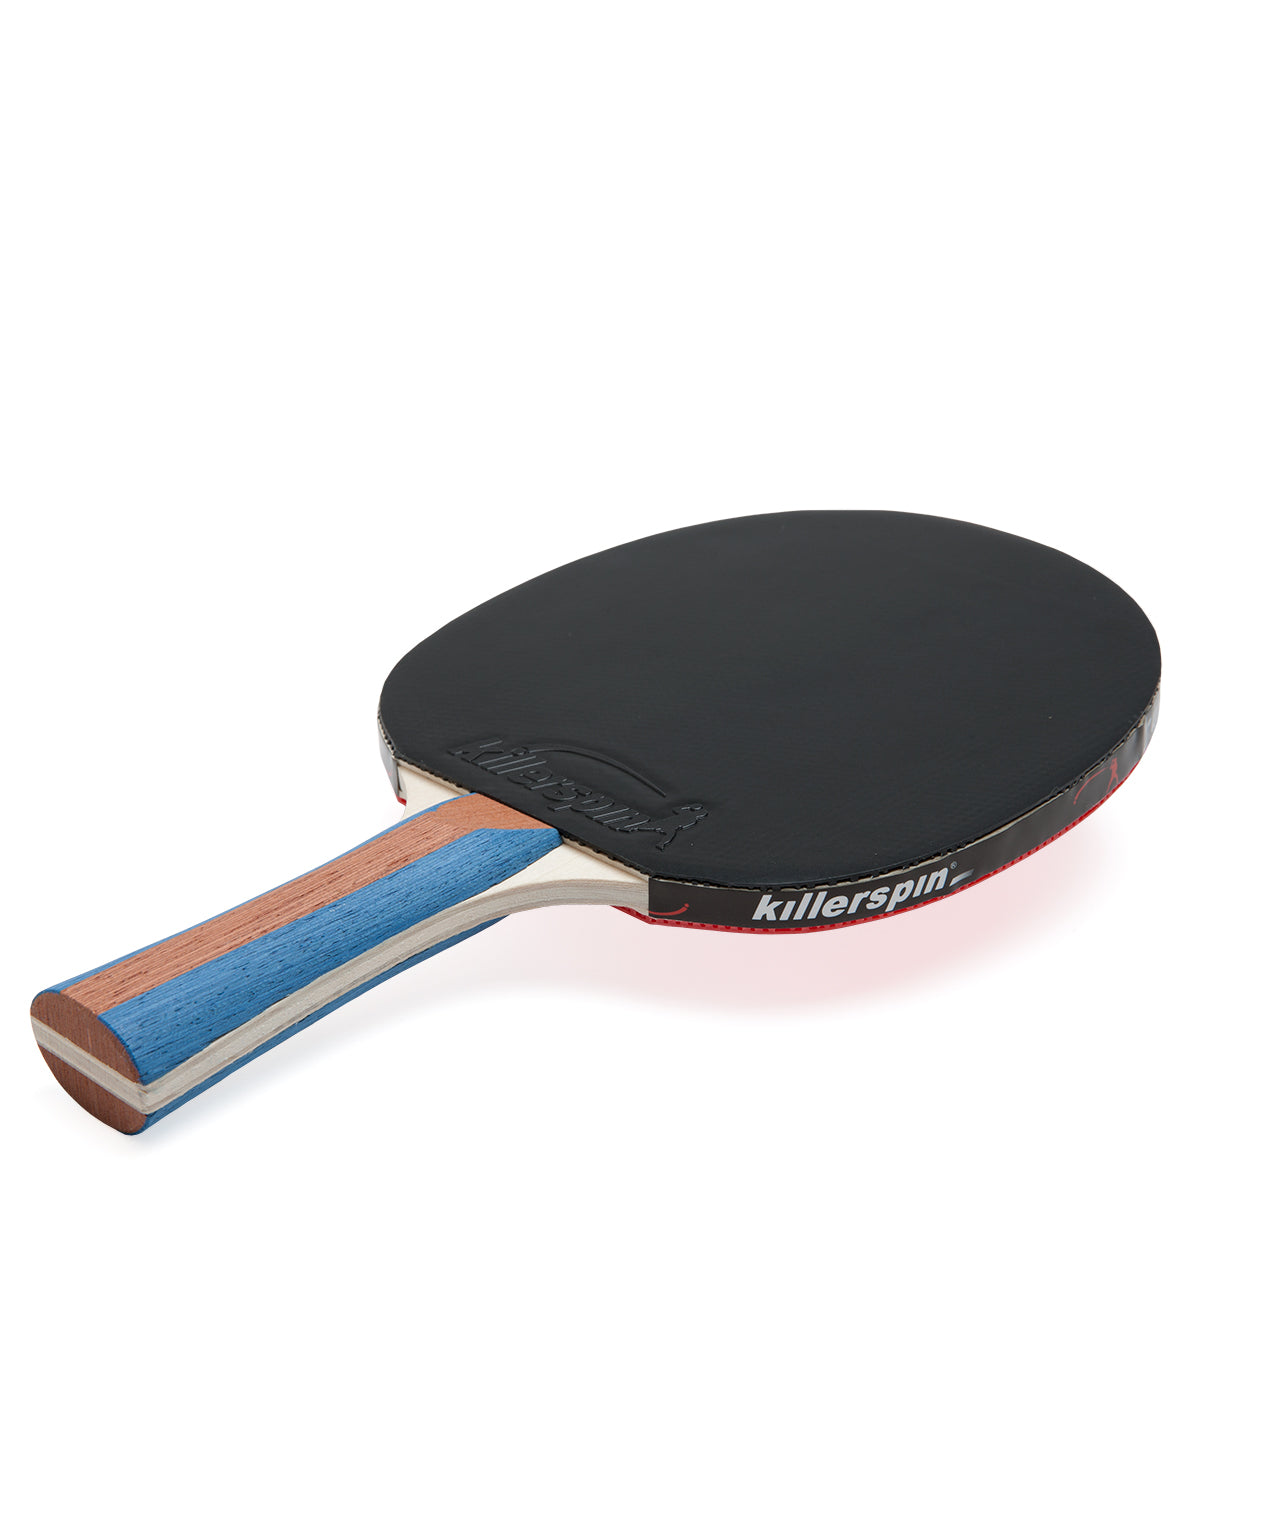 Killerspin Ping Pong Paddle Set JetSet2 - Black Rubber